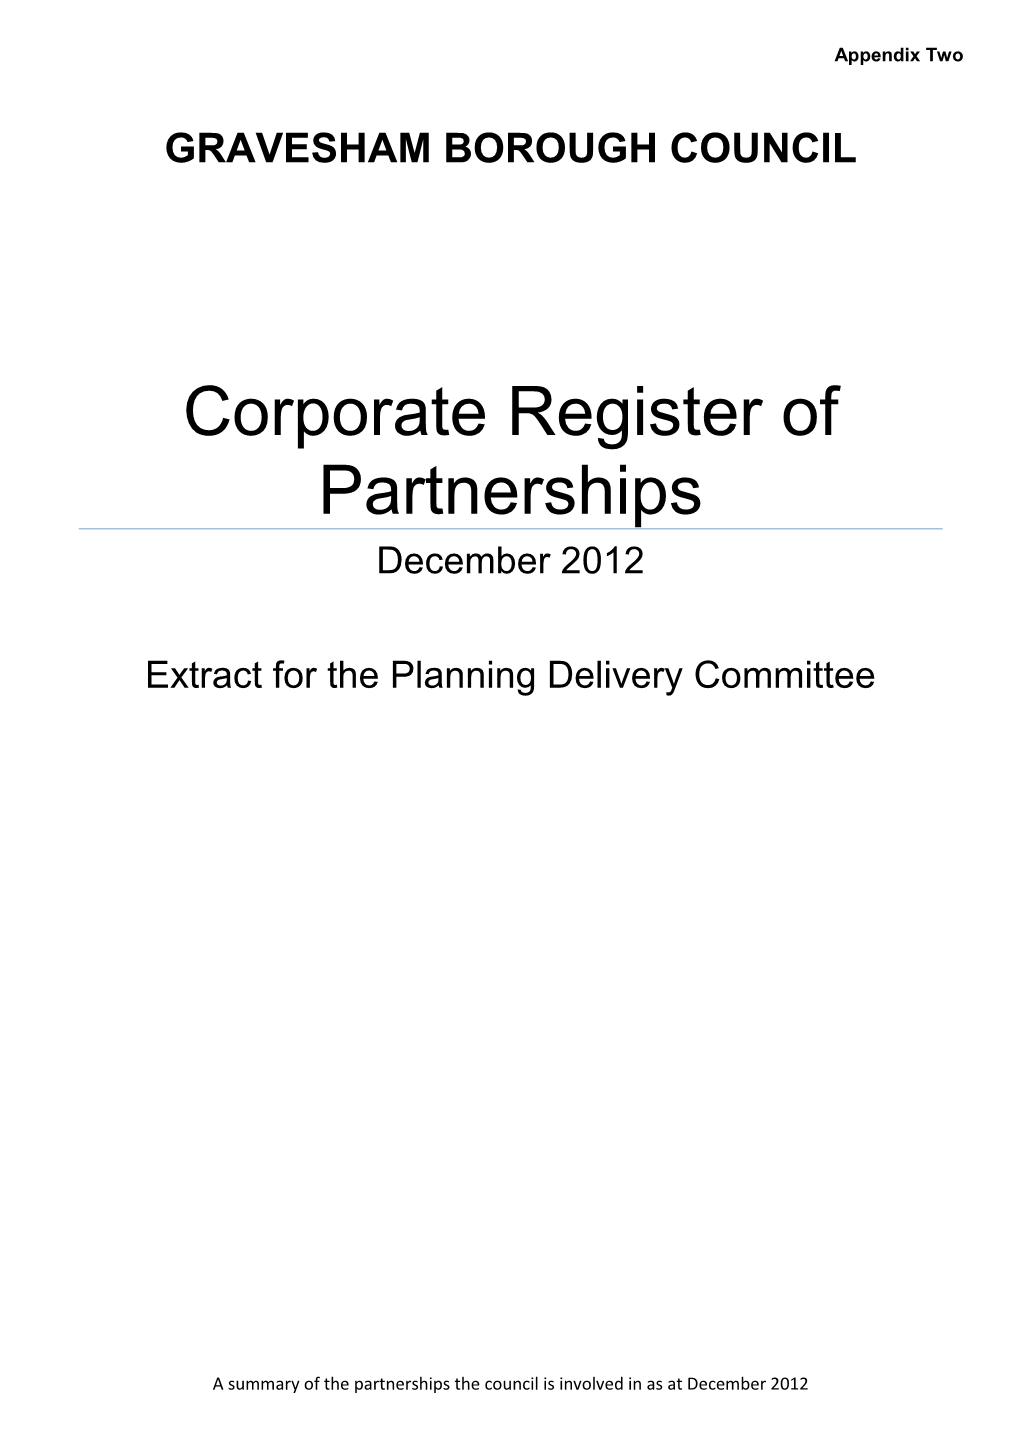 Corporate Register of Partnerships December 2012